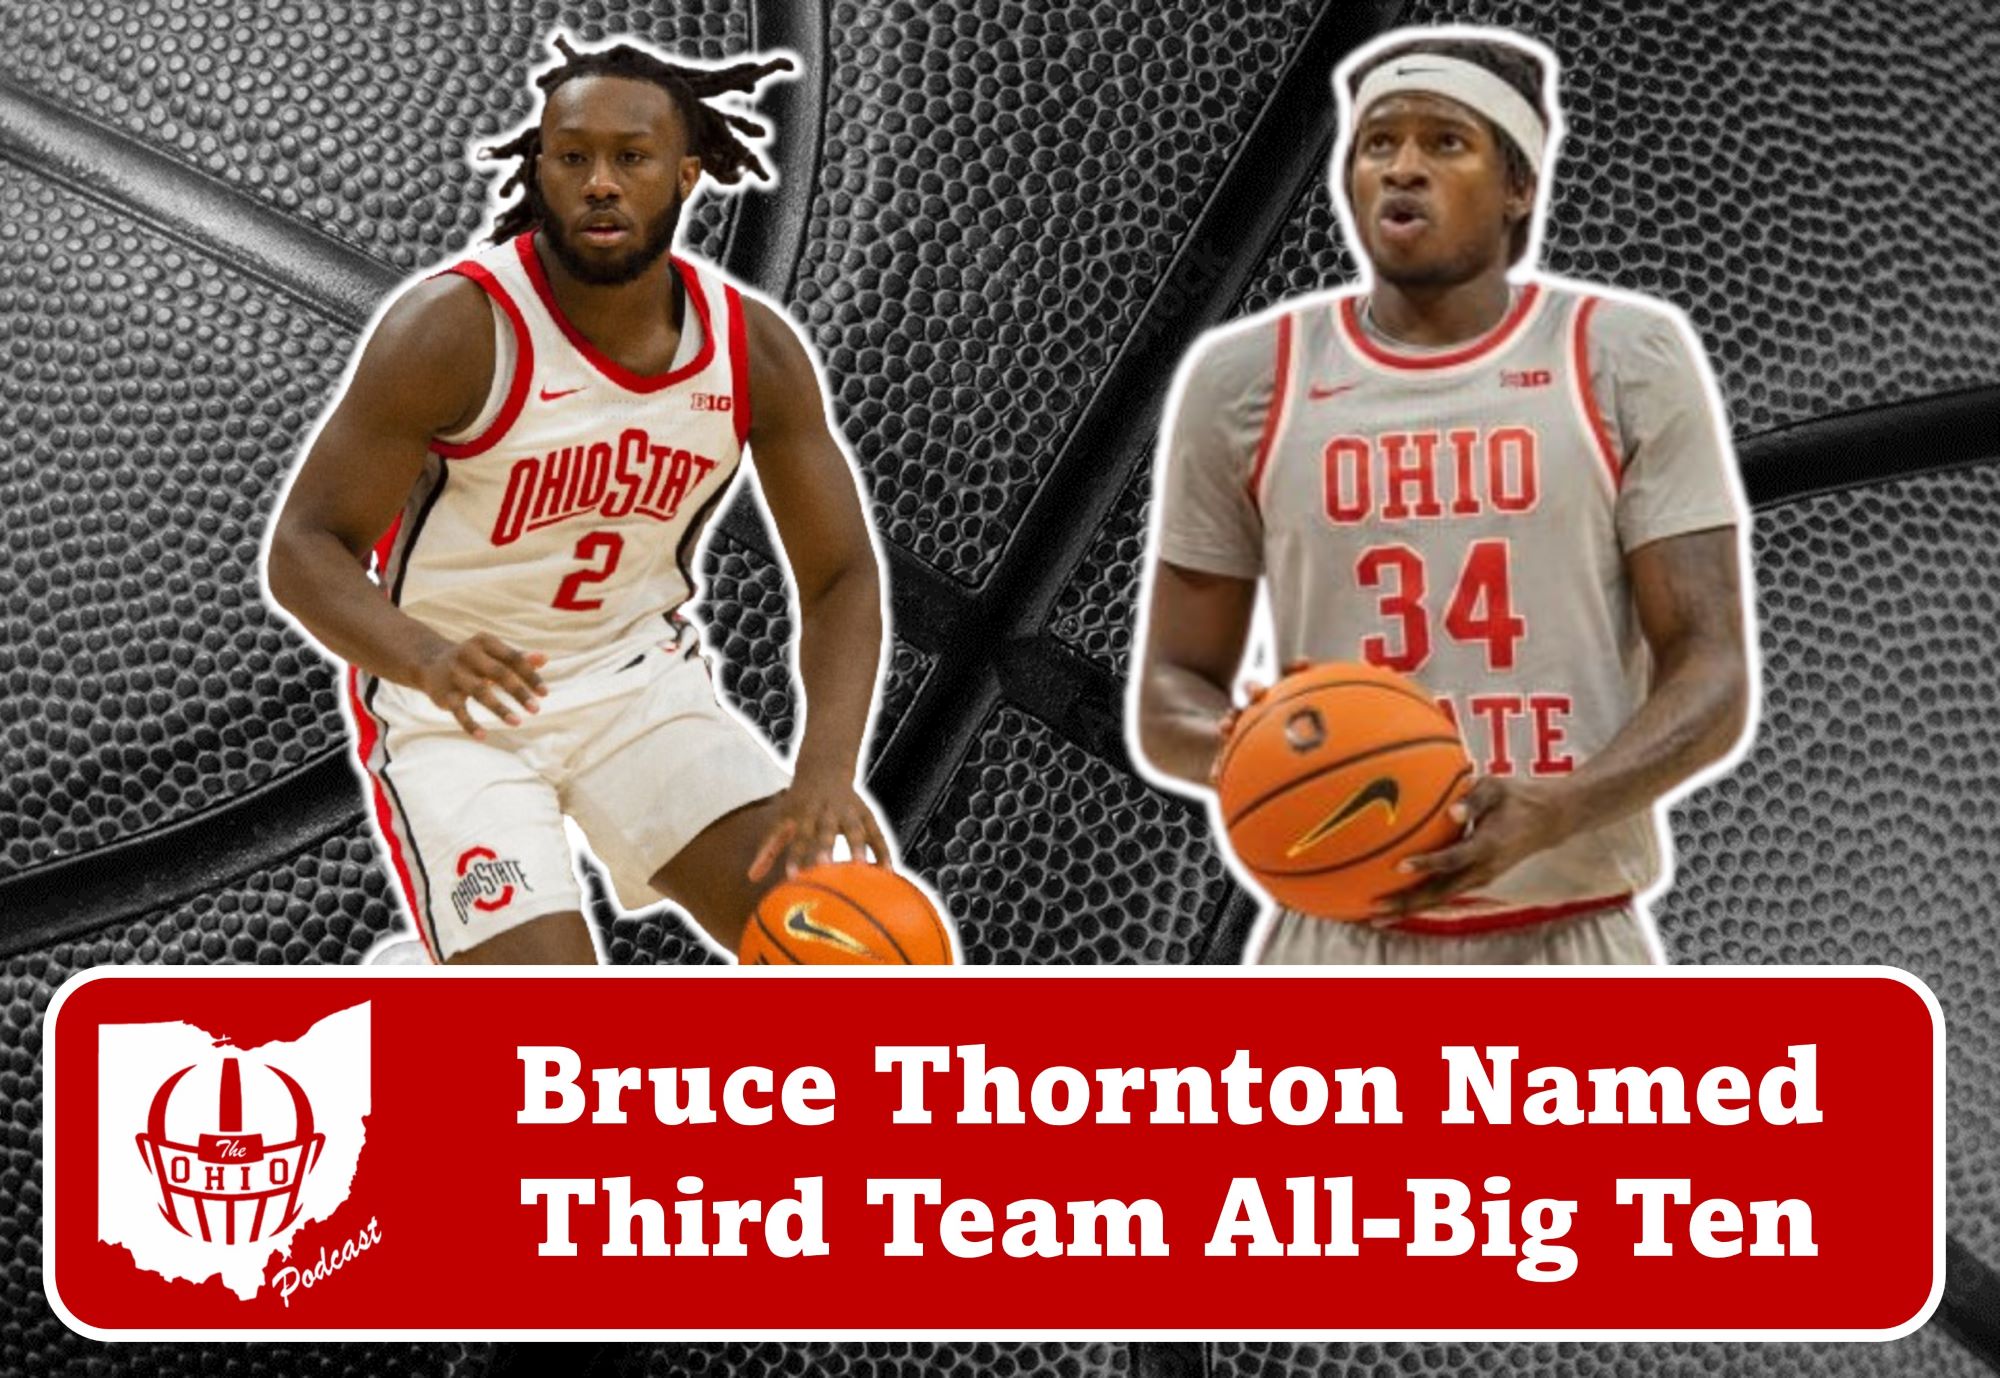 Bruce Thornton is Ohio State’s Lone Big Ten Honoree